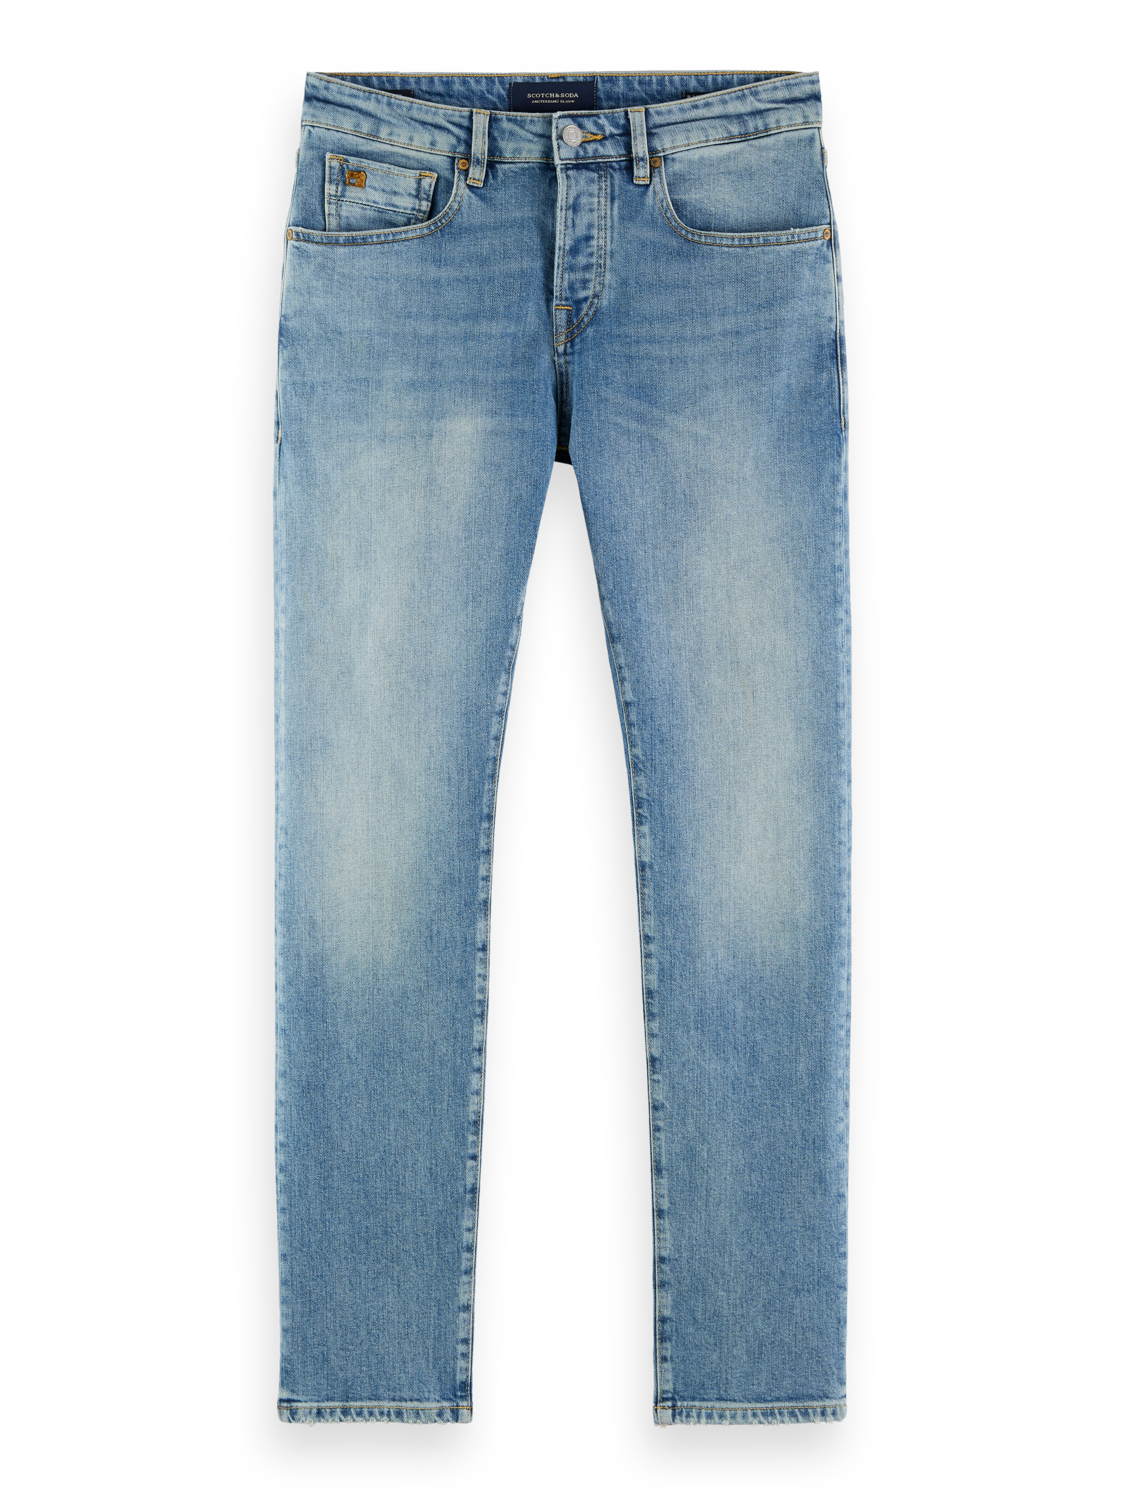 Scotch & Soda Ralston Jeans - Organic Cotton - Turquoise